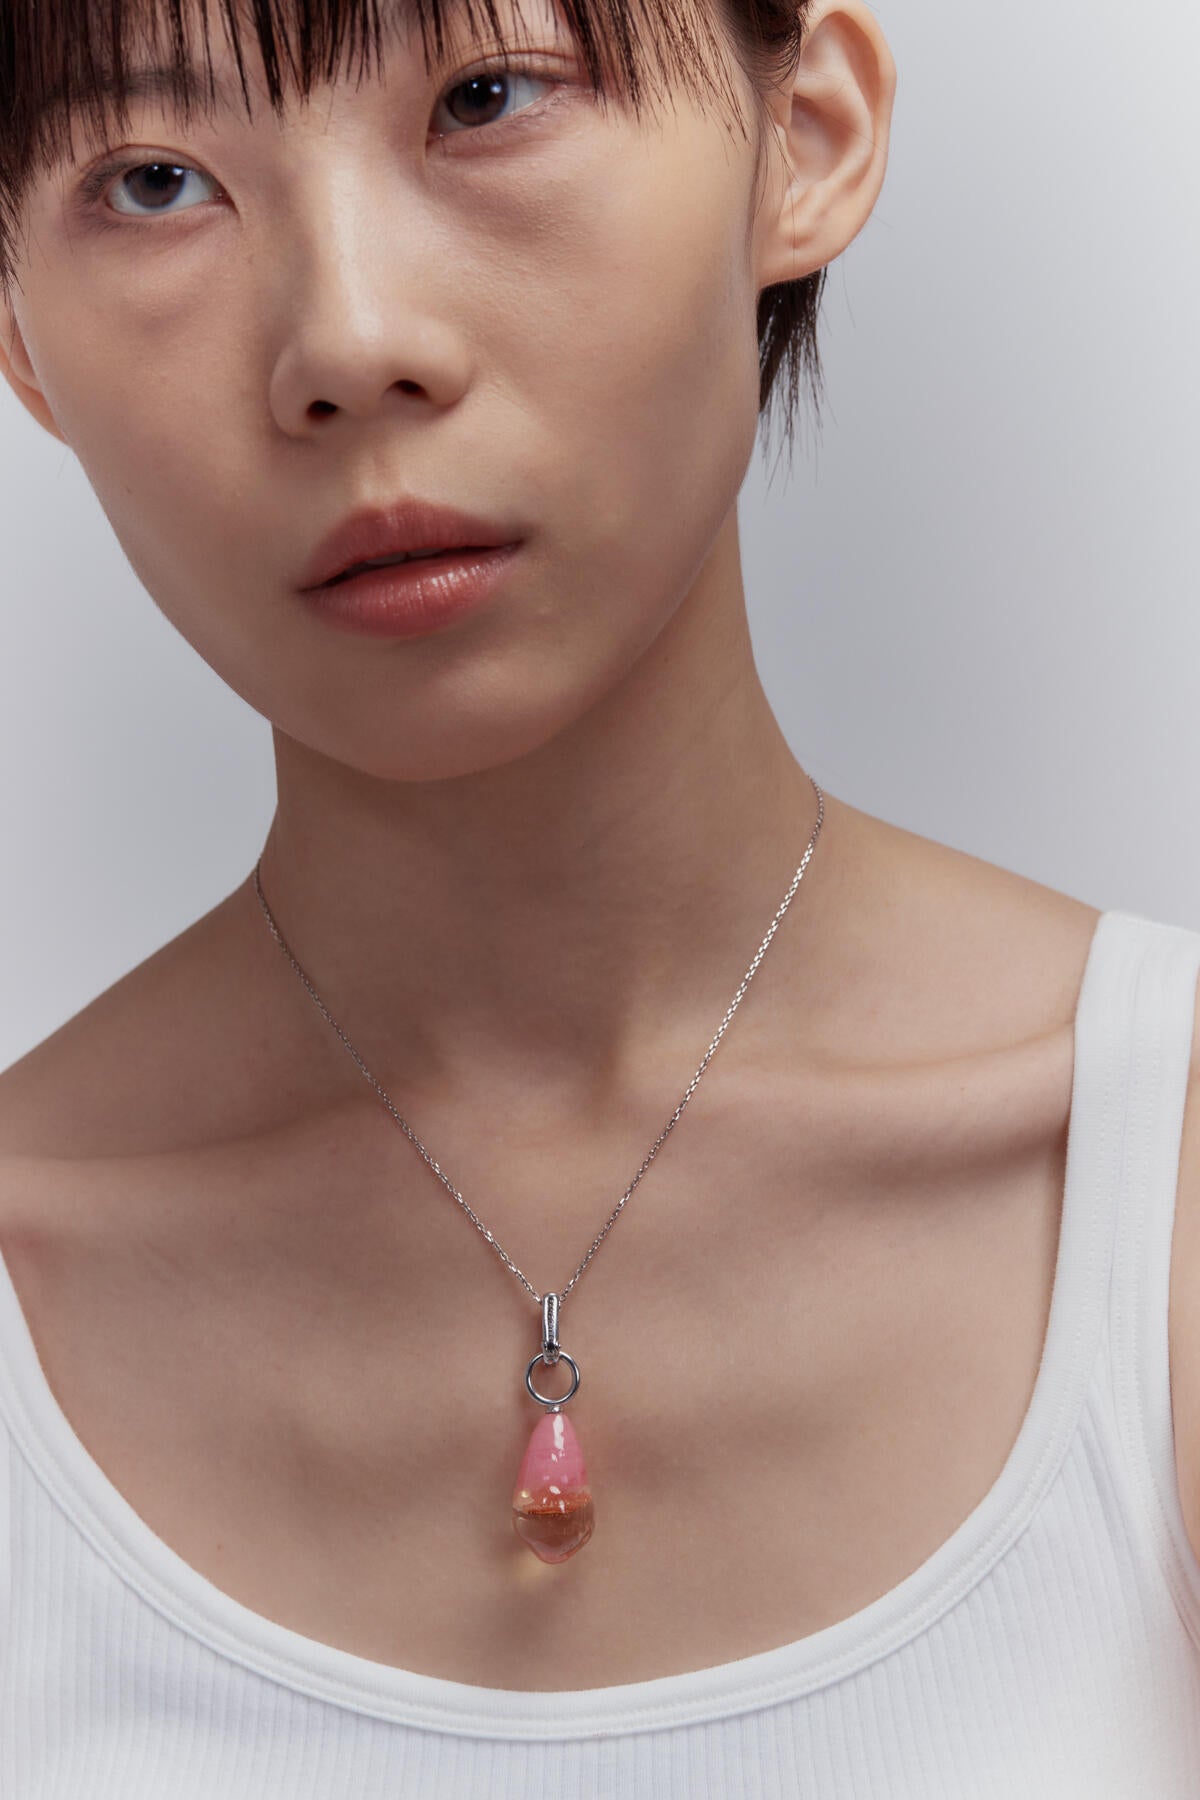 B213_Talisman Hybrid Stone Necklace - Pink_L_01